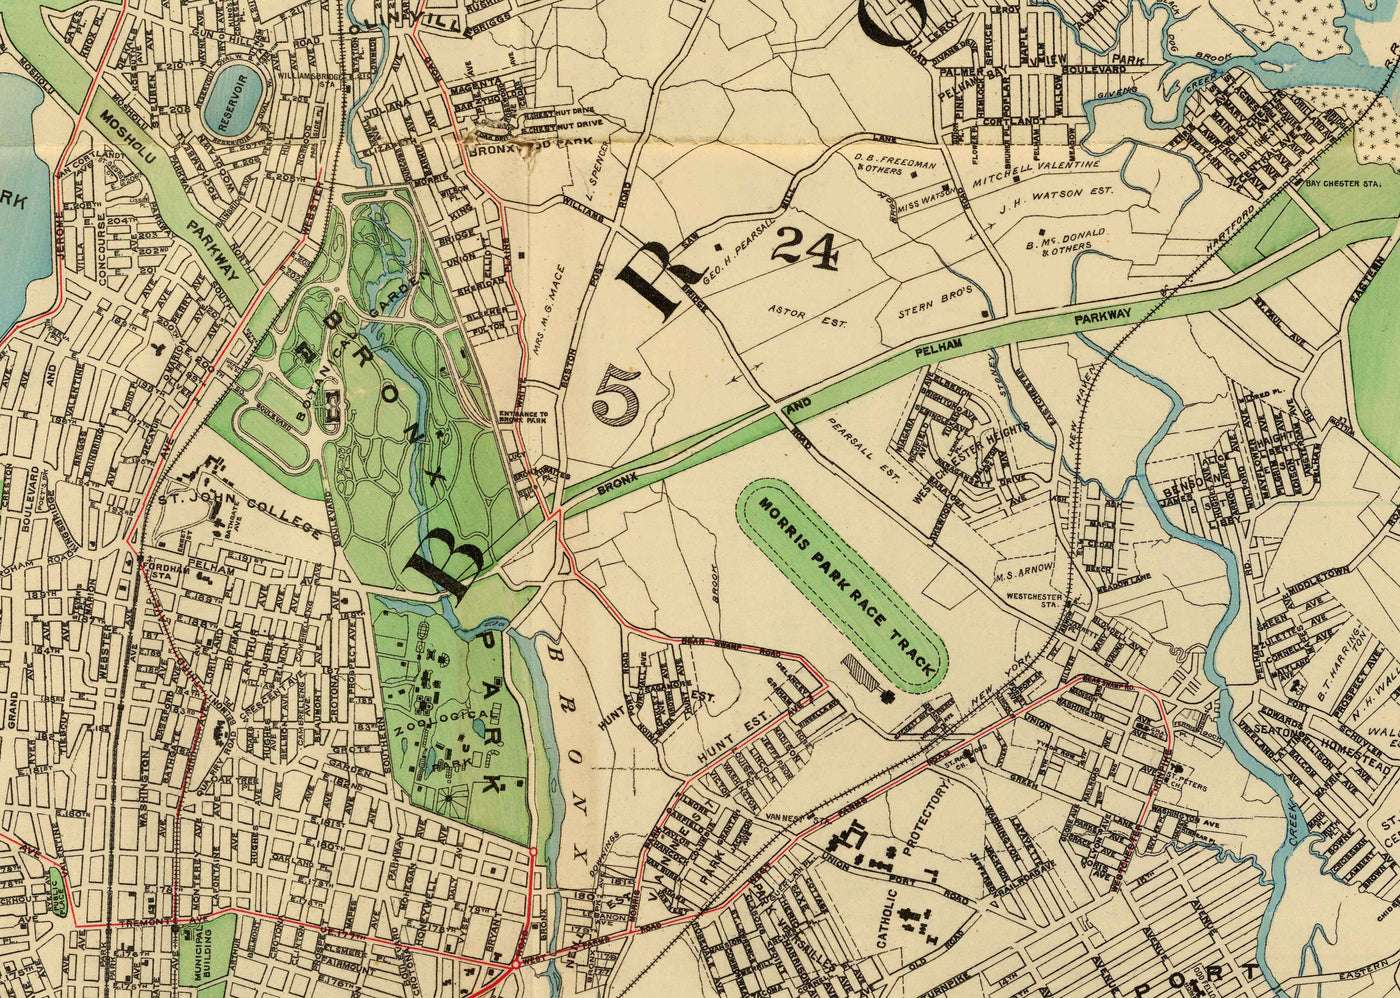 Ancienne carte du Bronx en 1900 par Hyde and Co - New York City, Pelham Bay Park, Hunter Island, Botanical Garden, Harlem River